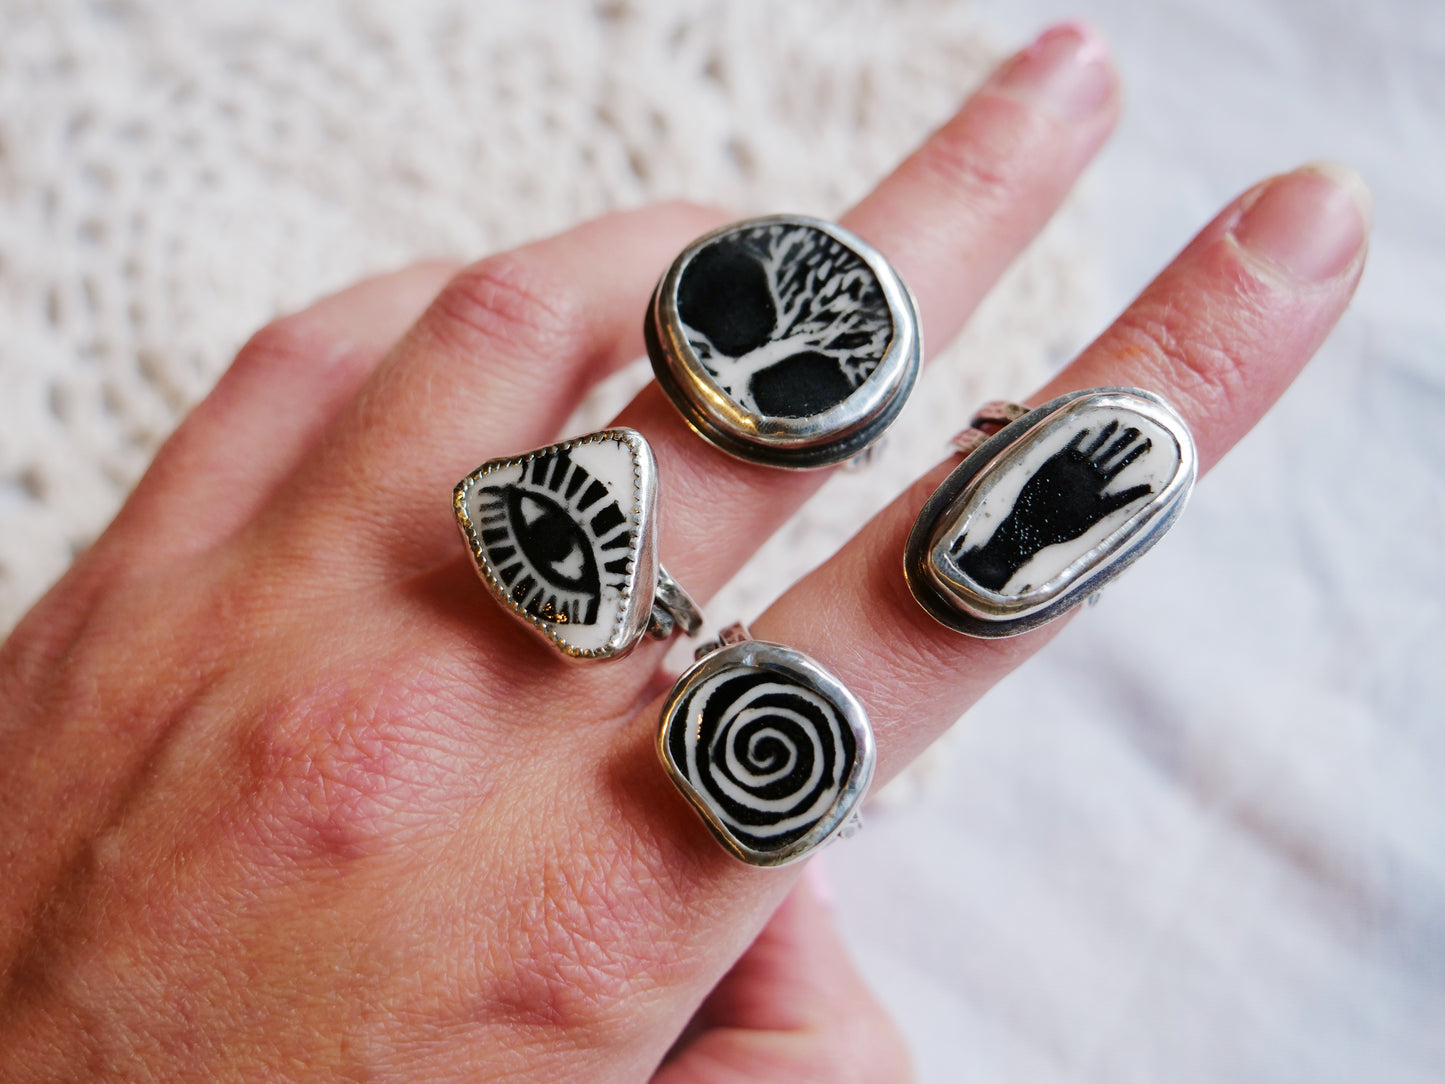 Ceramic Symbol Ring - The Spiral